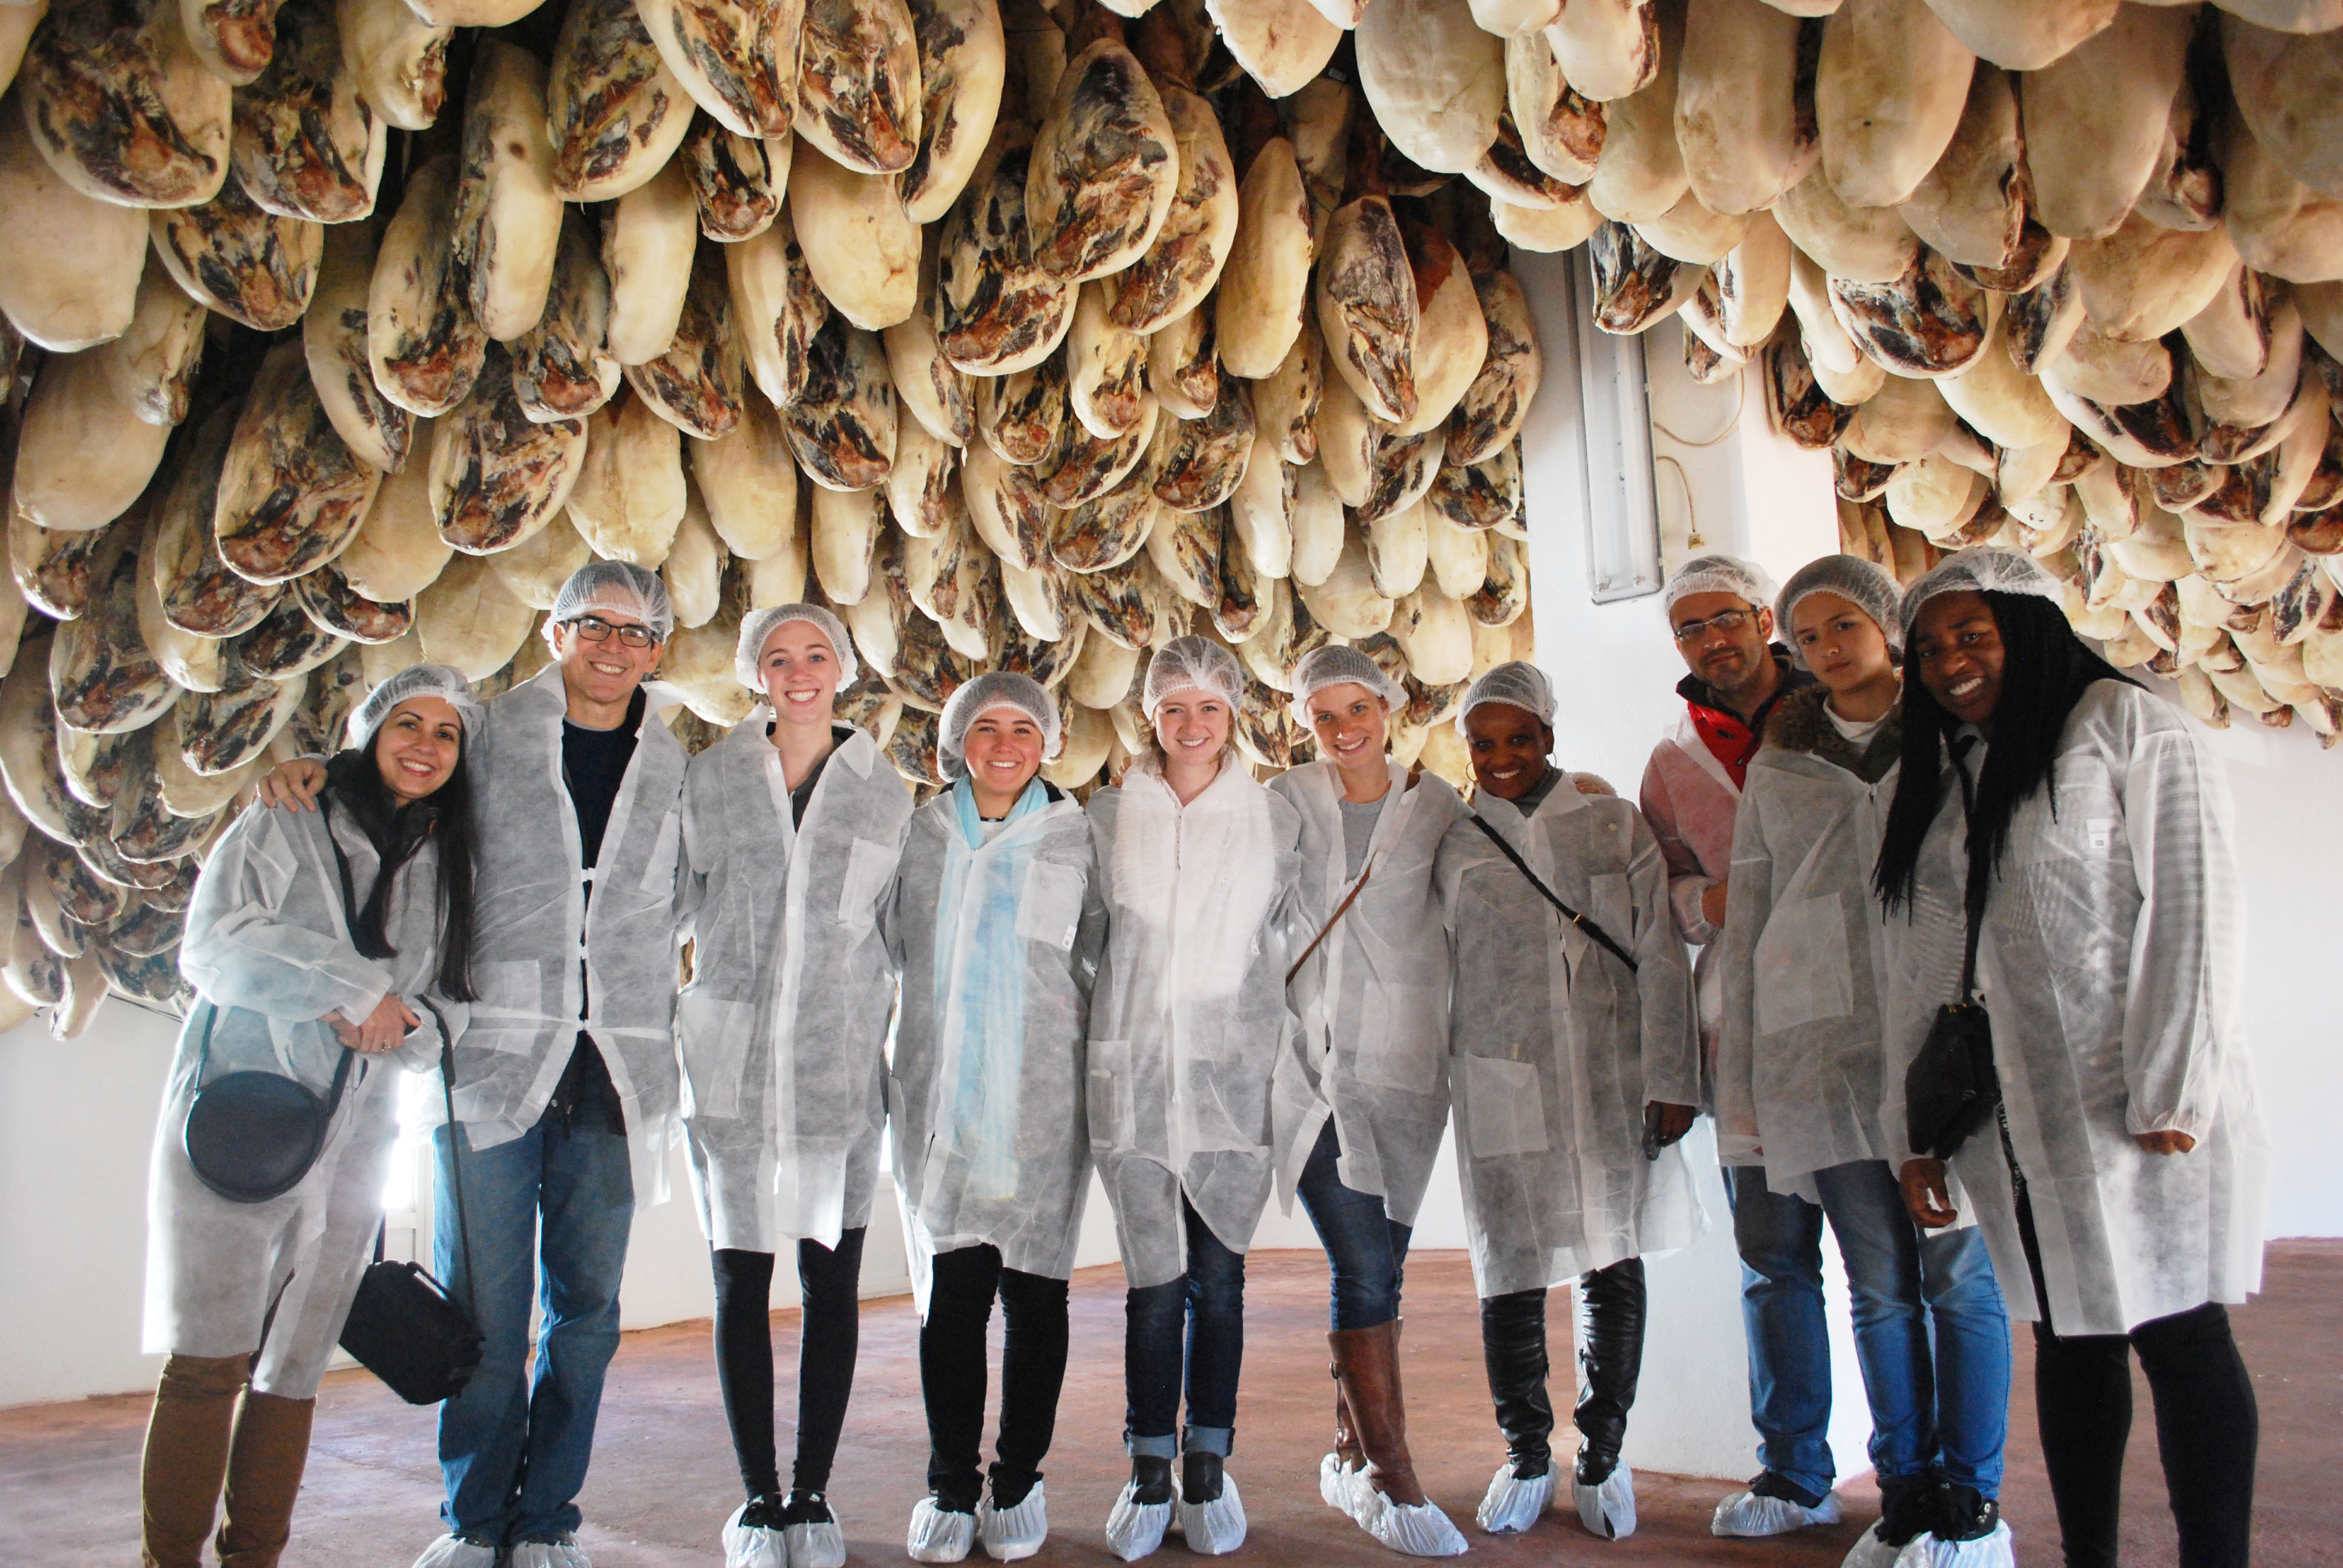 Iberian ham production